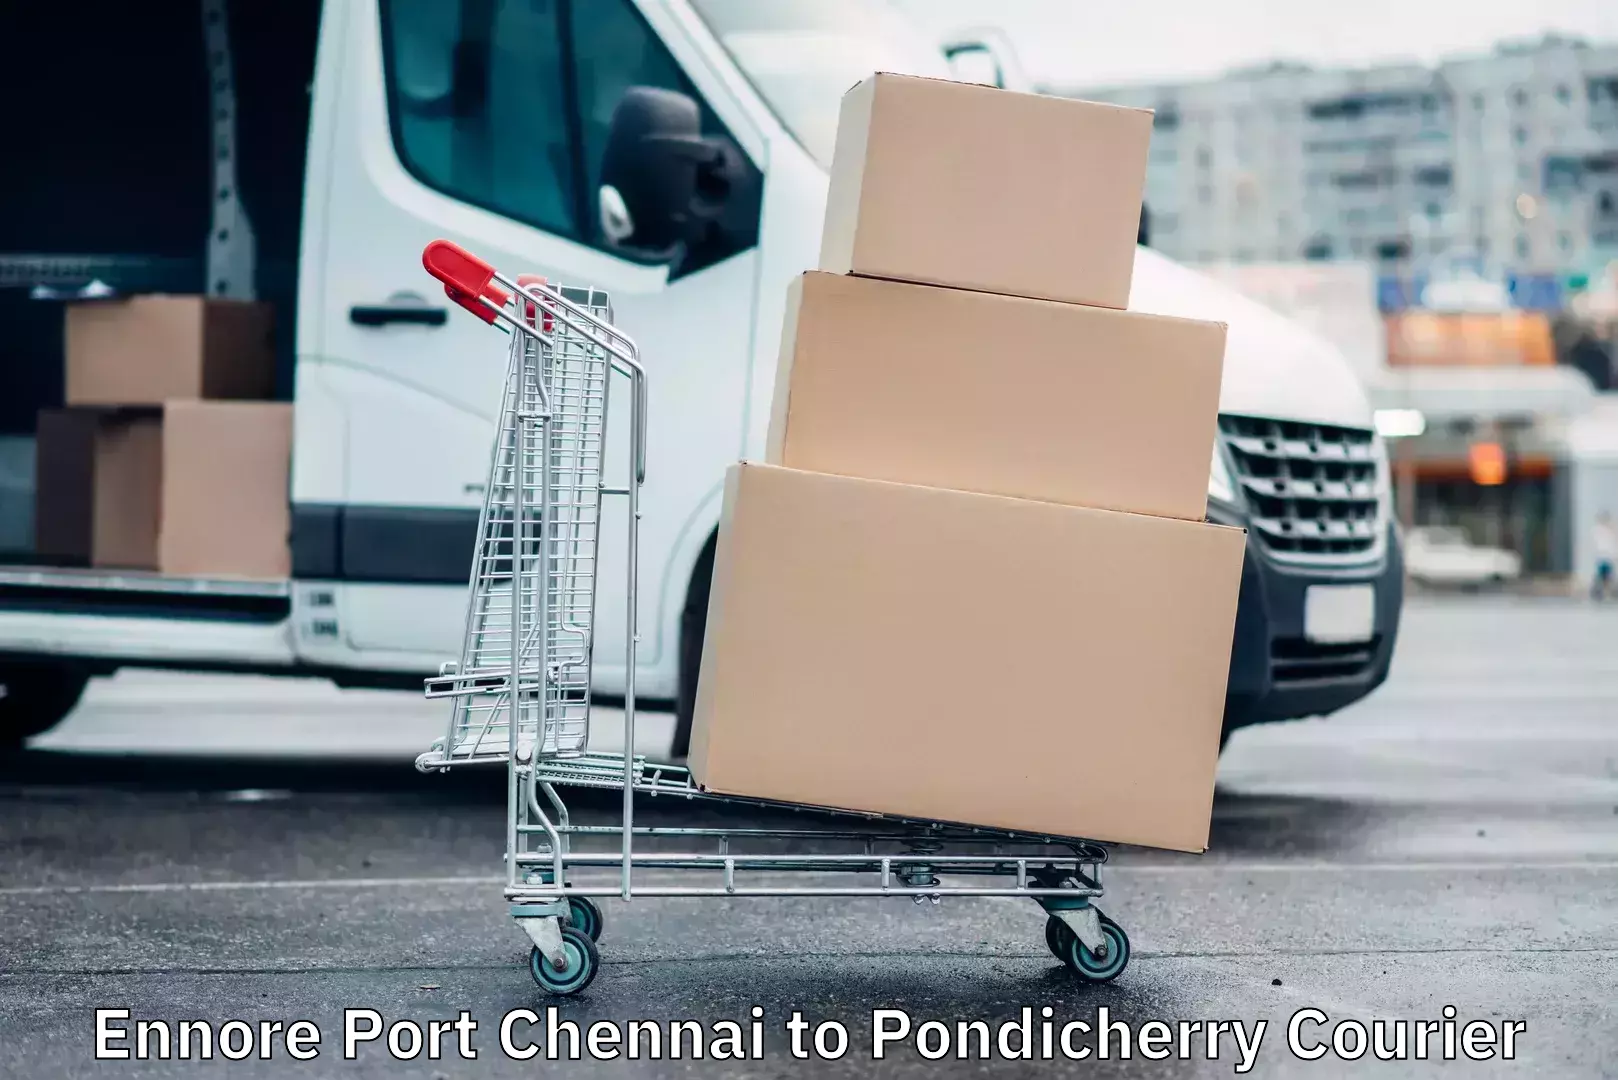 Express mail service Ennore Port Chennai to Pondicherry